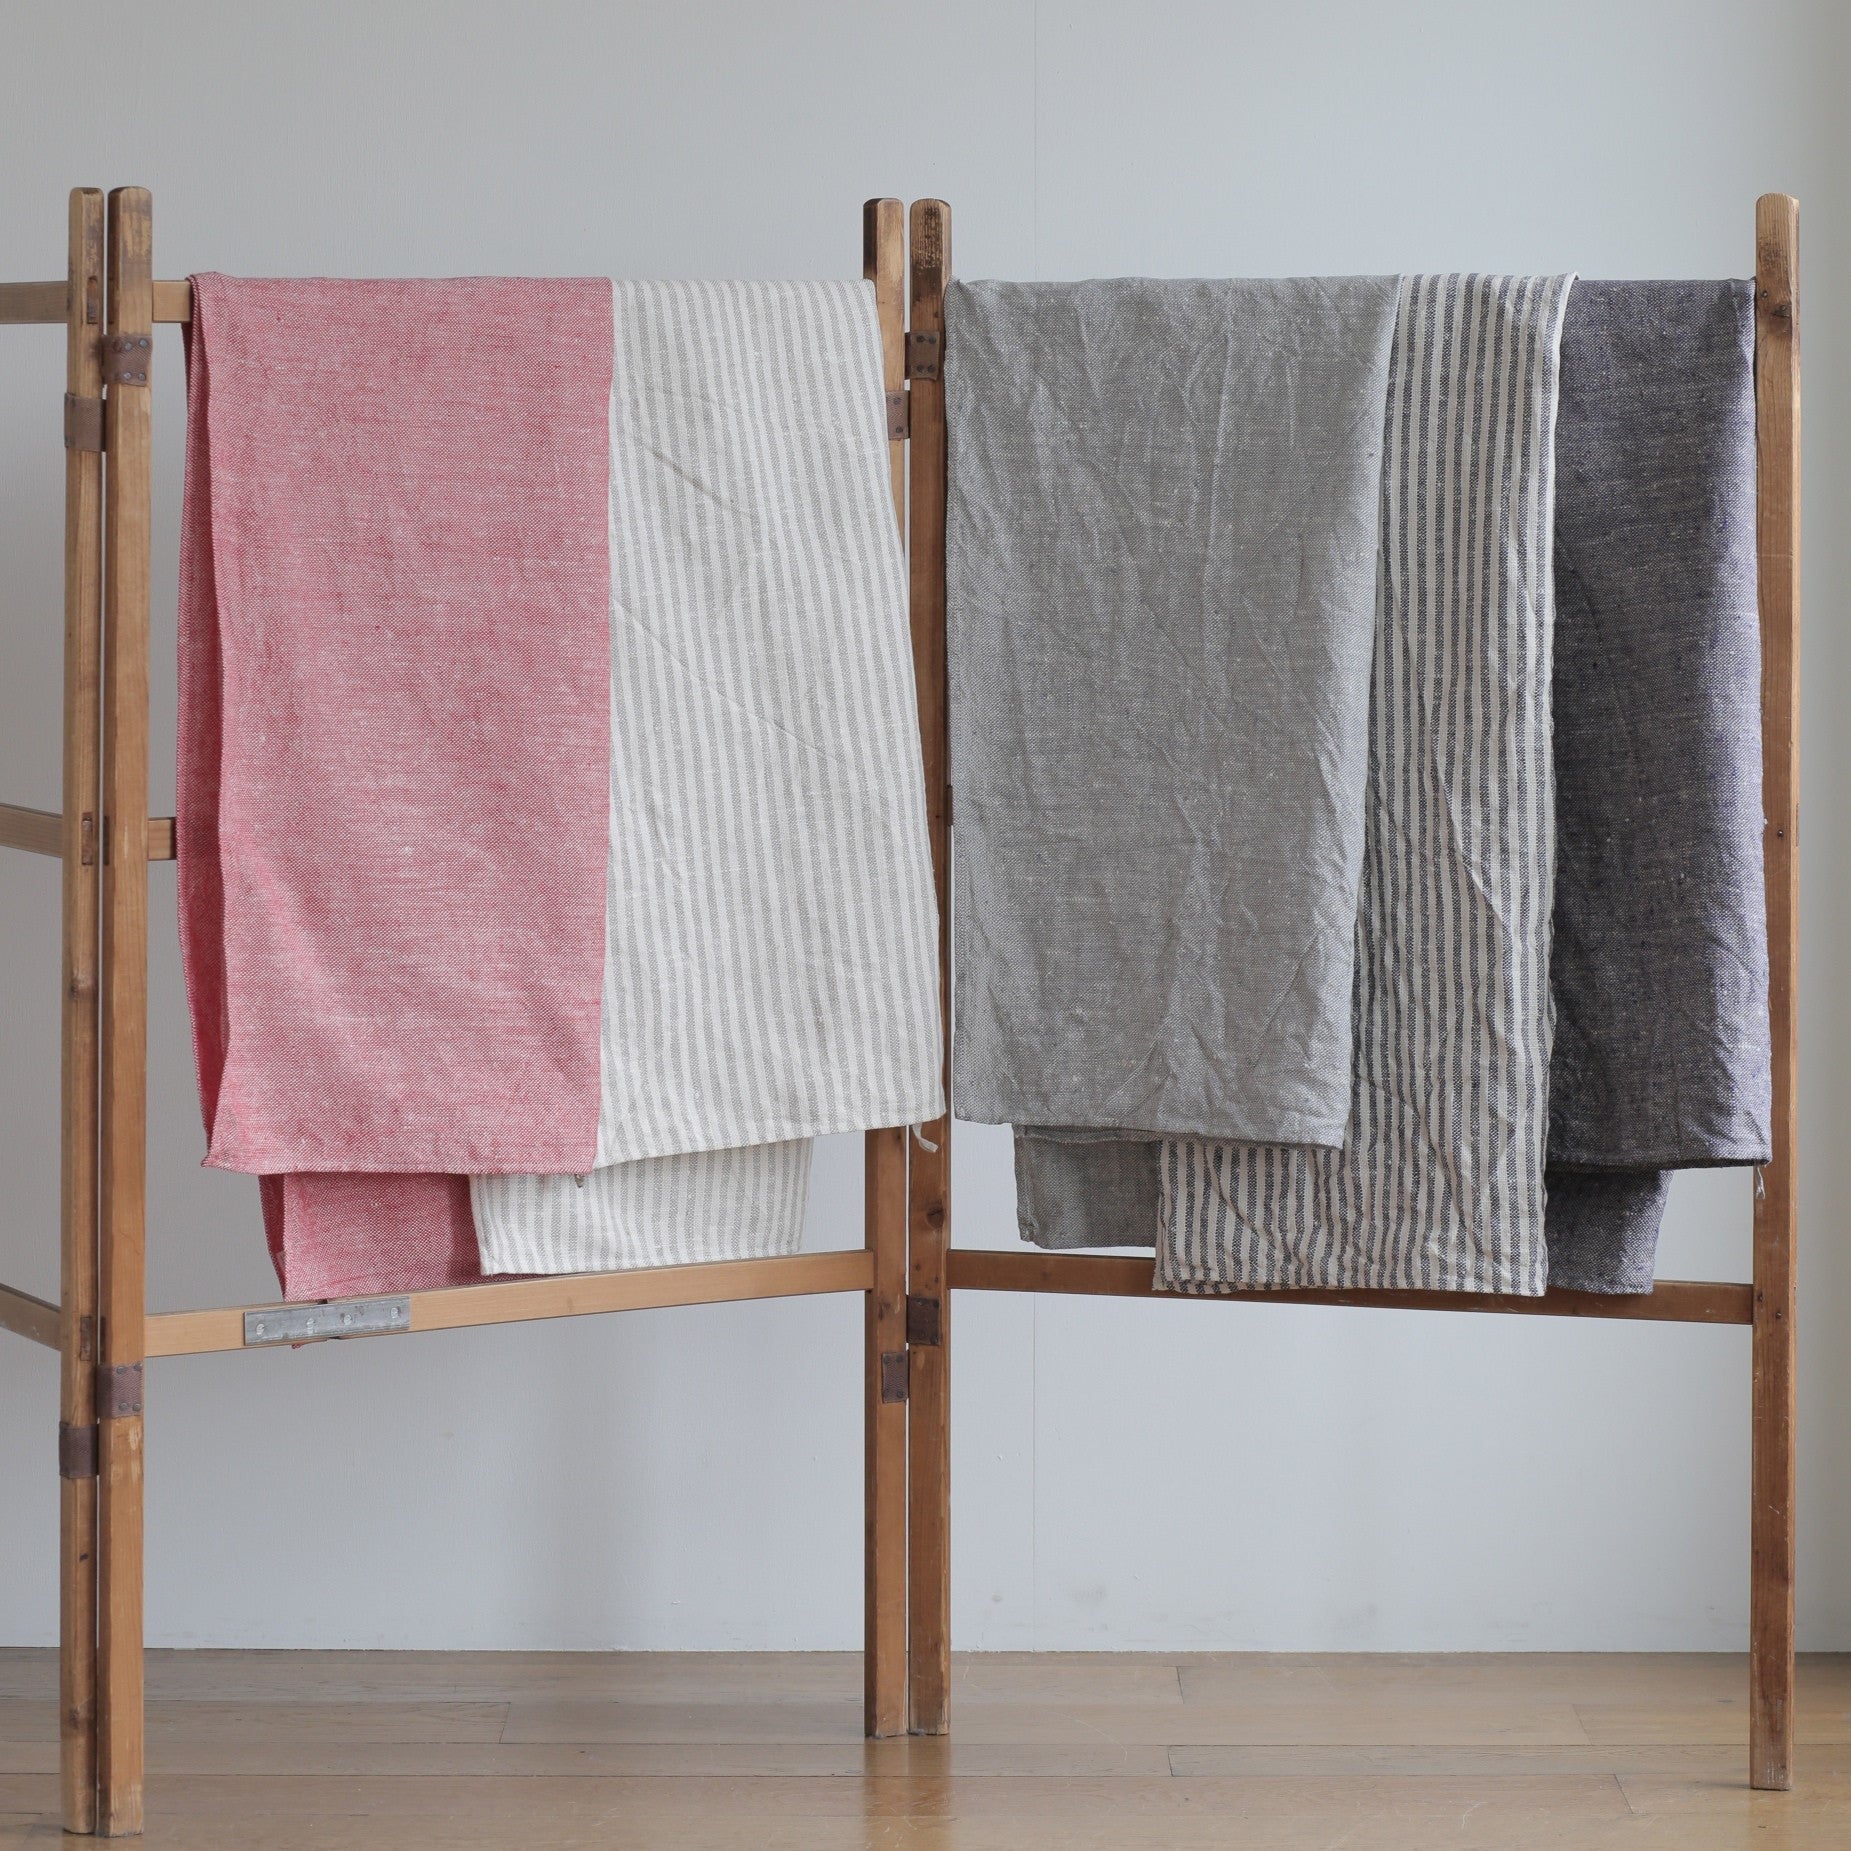 Chambray Grey Linen Towel  Fog Linen Work - Ruby Roost